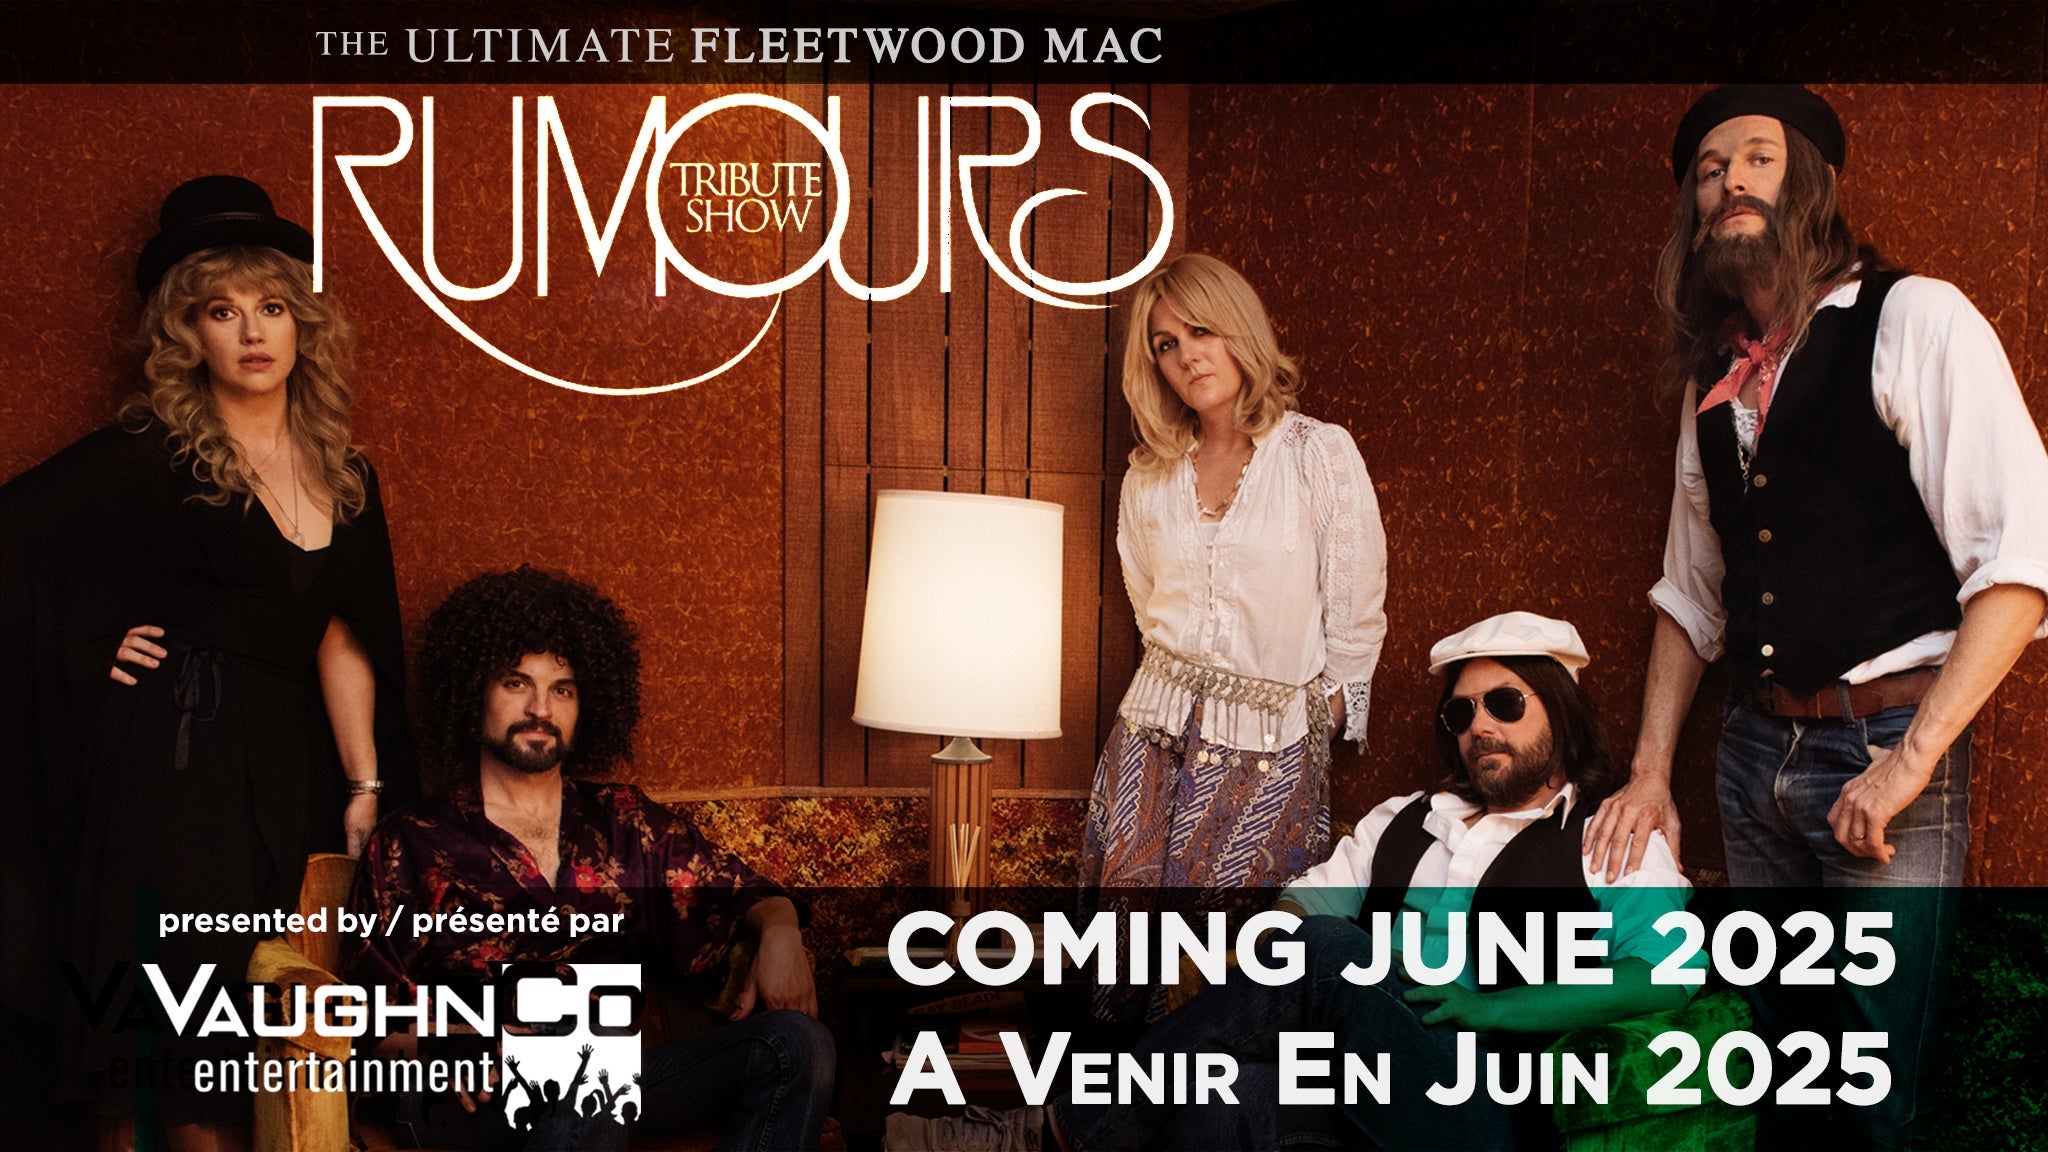 Rumours - The Ultimate Fleetwood Mac Tribute presale information on freepresalepasswords.com